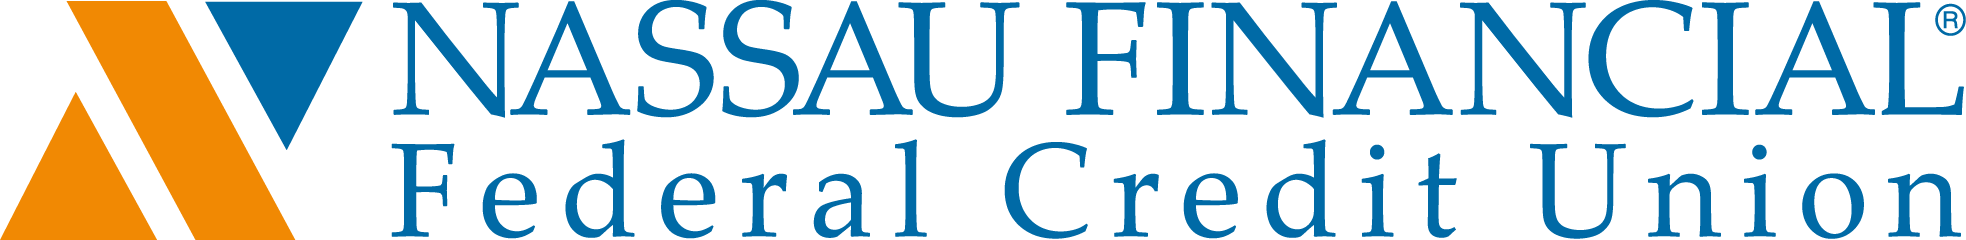 Nassau Financial Federal Credit Union Company Logo